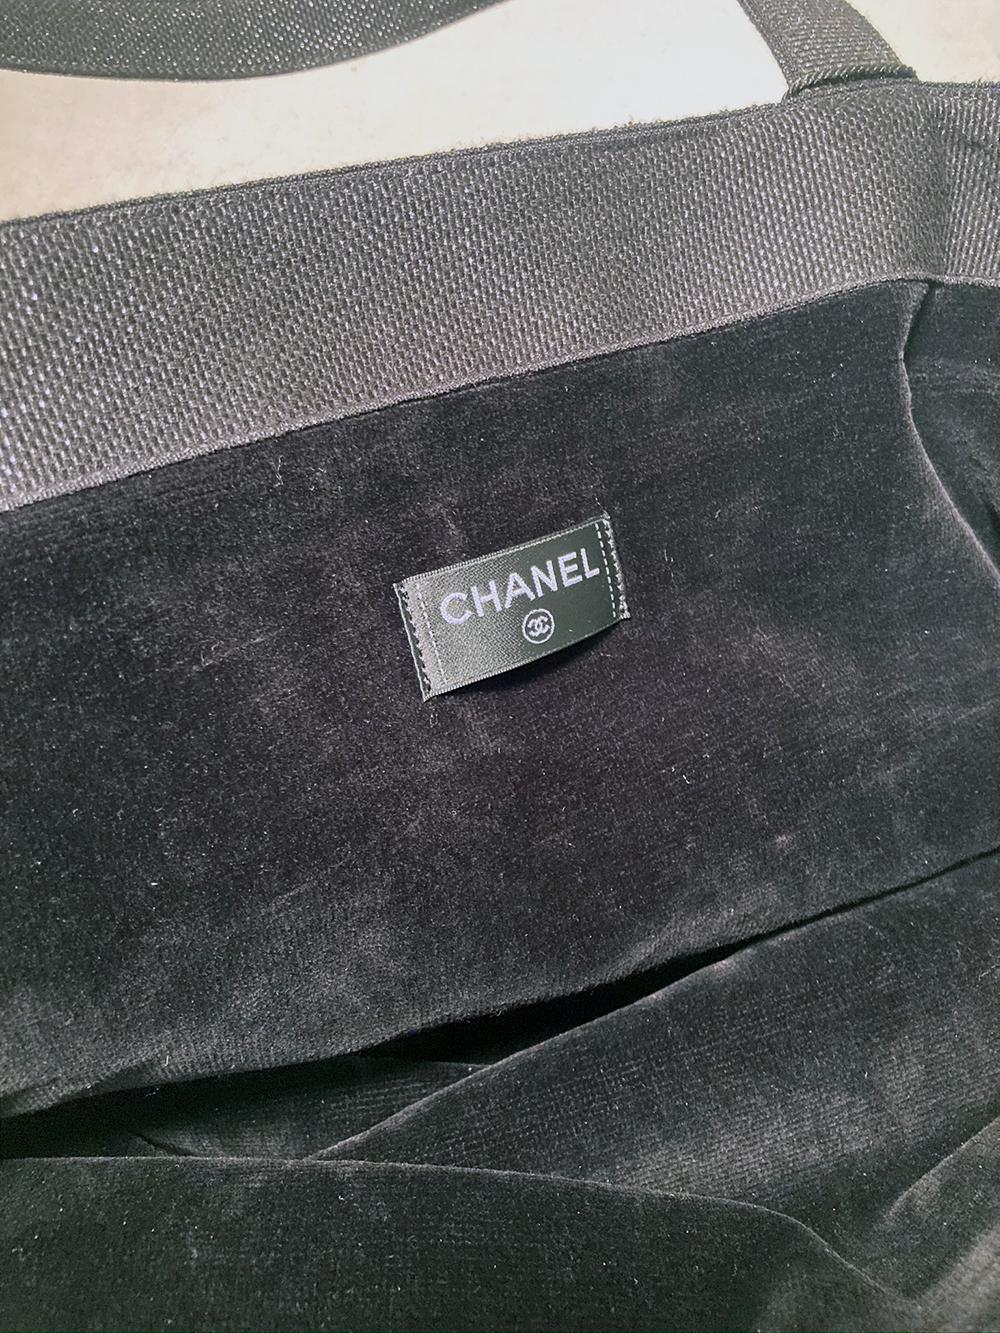 Chanel Black Canvas Raw Edge Tote Bag For Sale 1